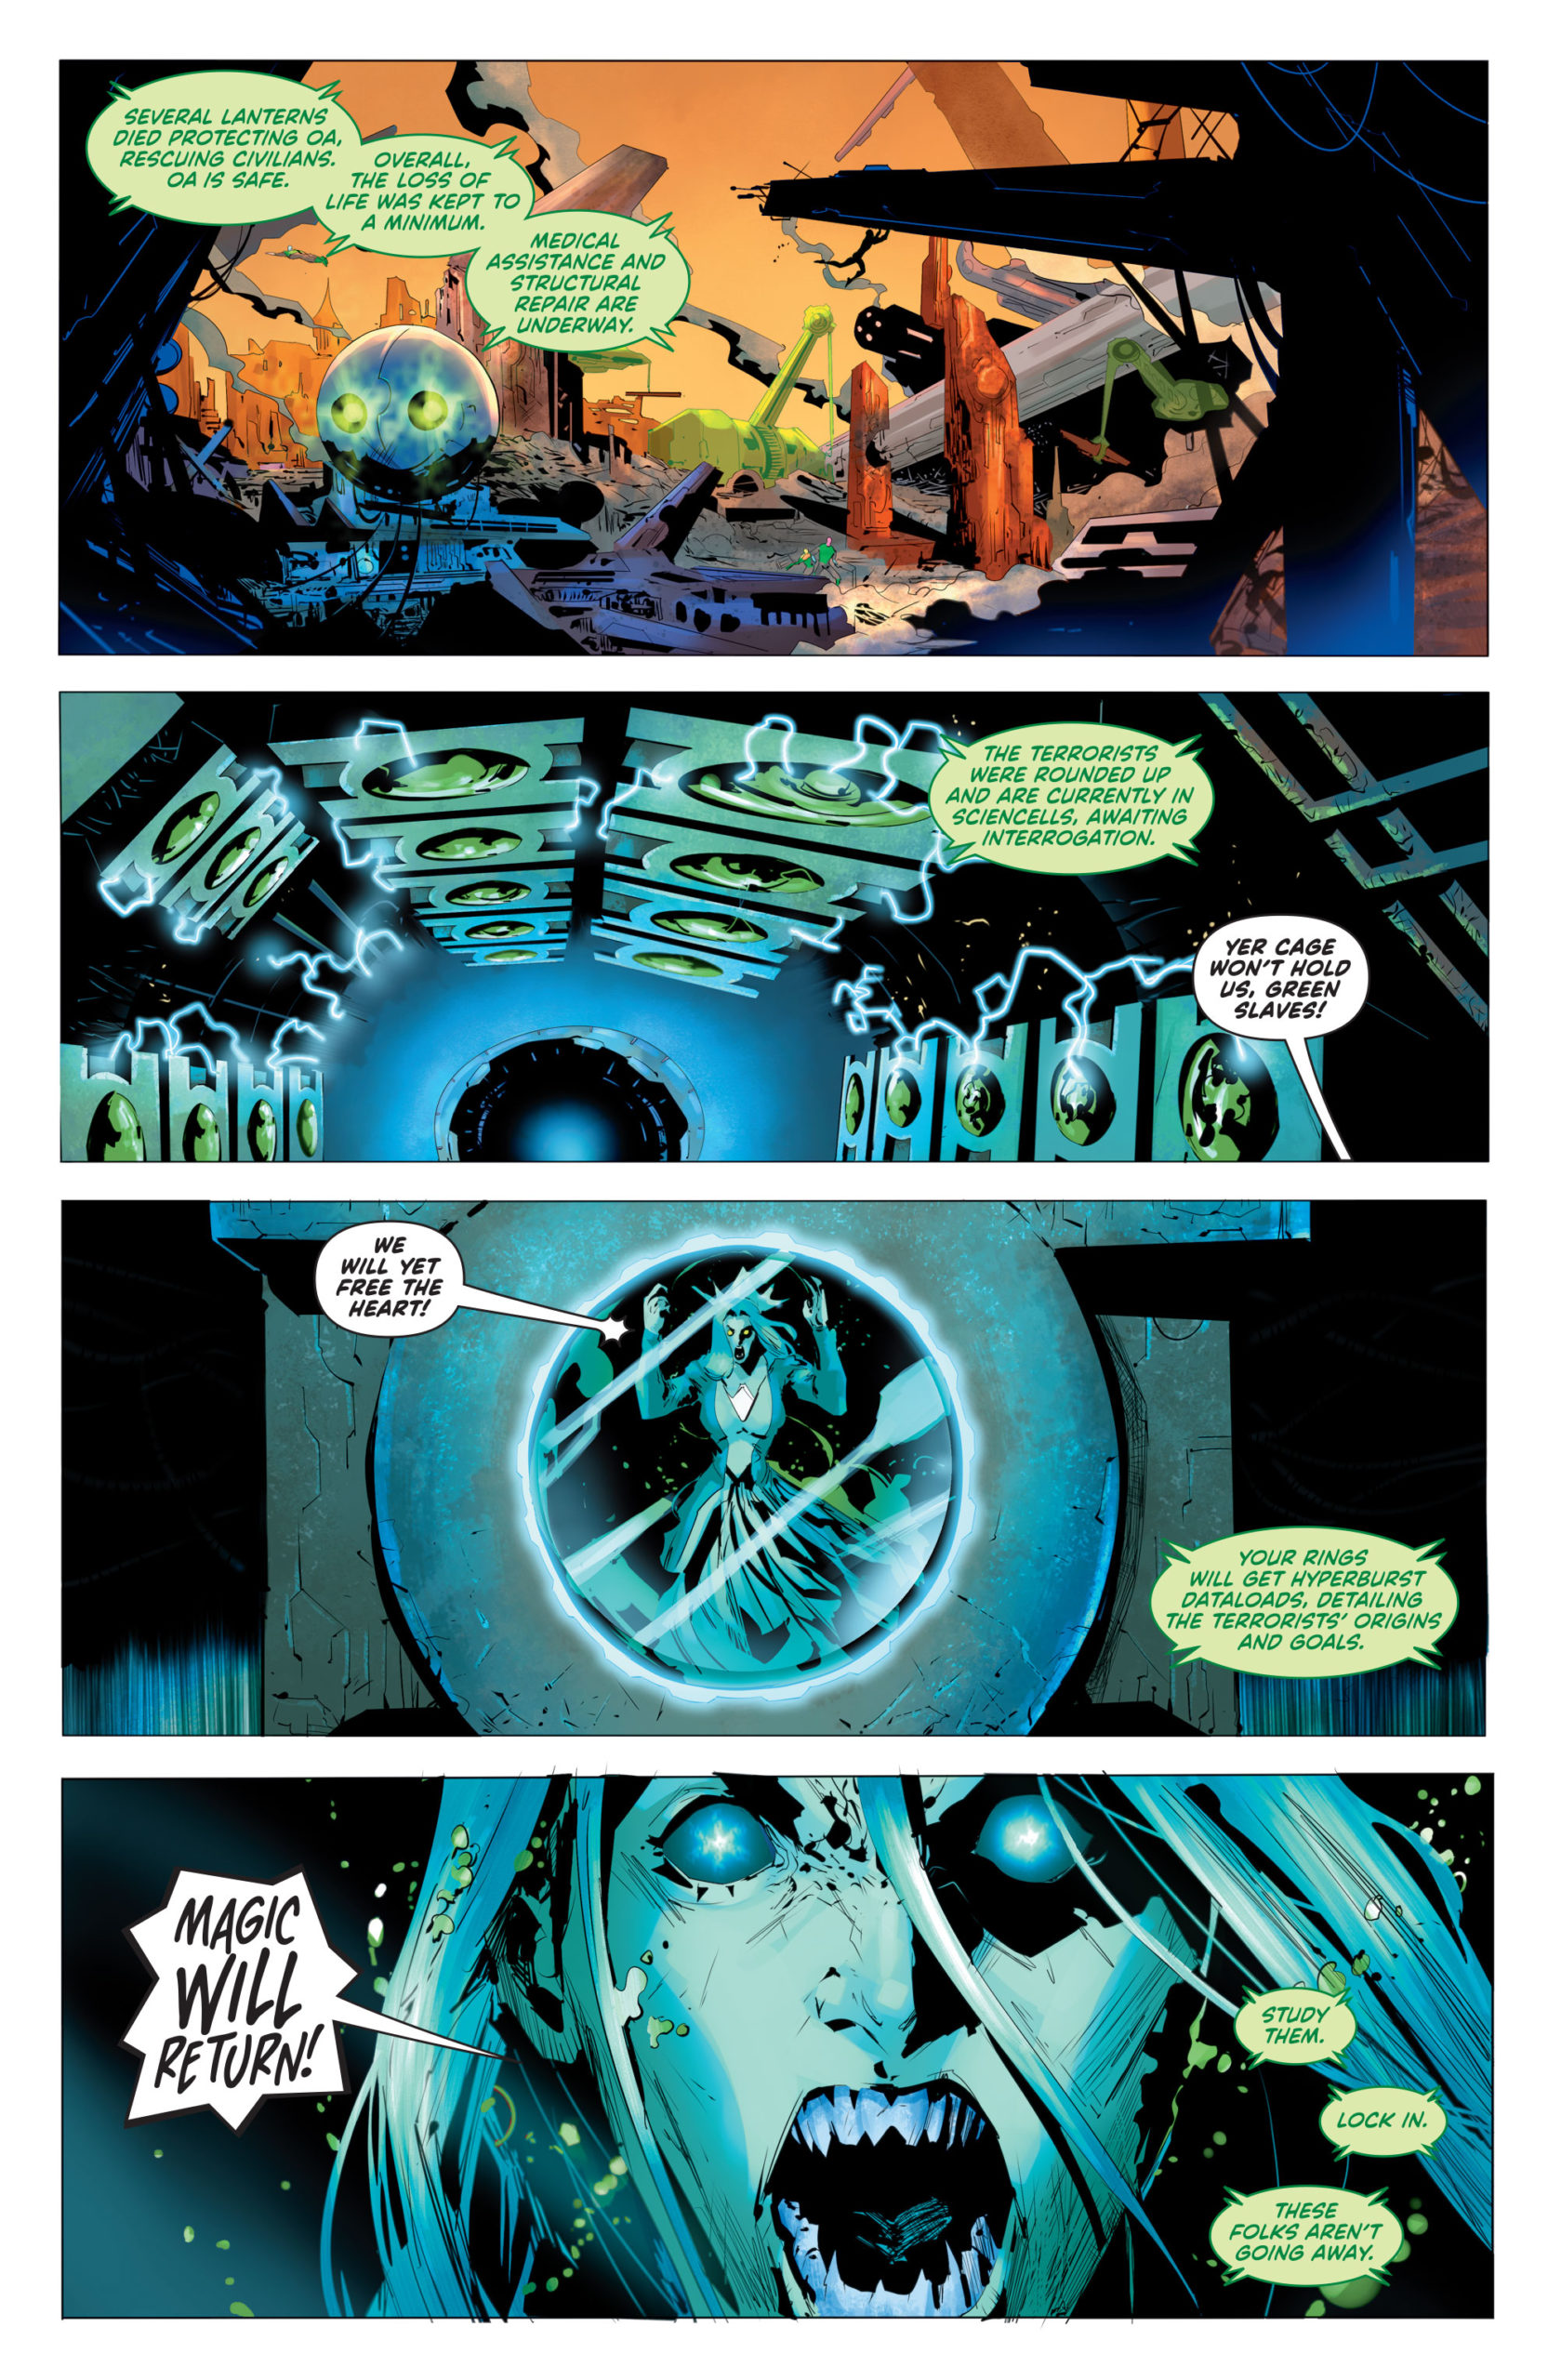 Green Lantern #2 DC Comics News